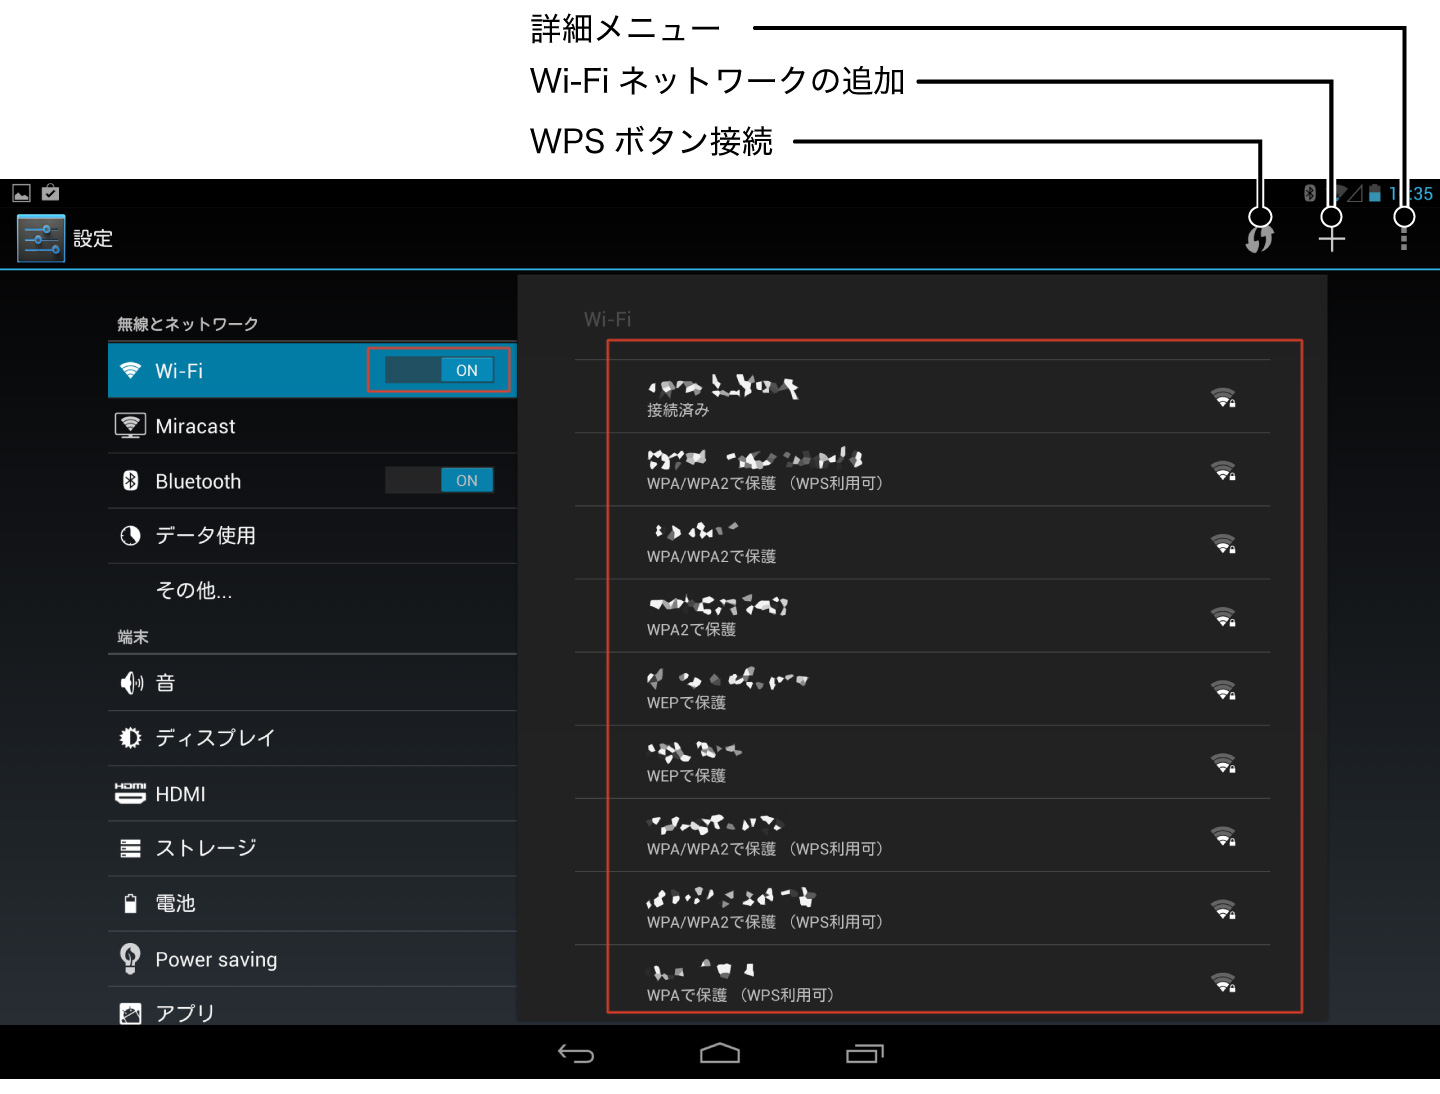 「Wi-Fi」設定 | Android 4.2 タブレット マニュアル制作事例